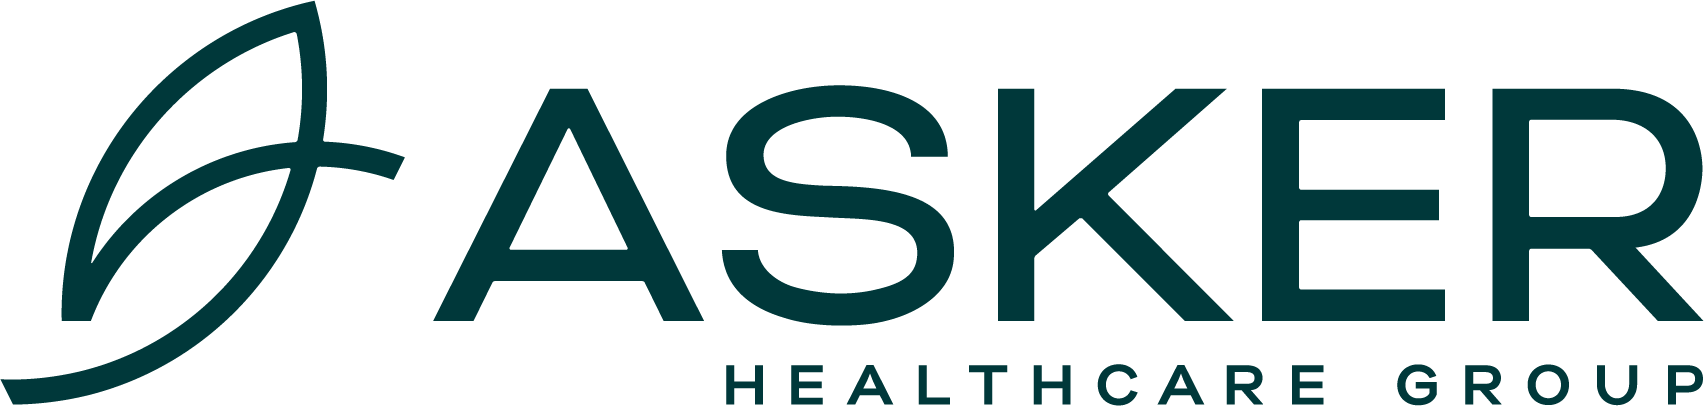 Asker Healthcare Group